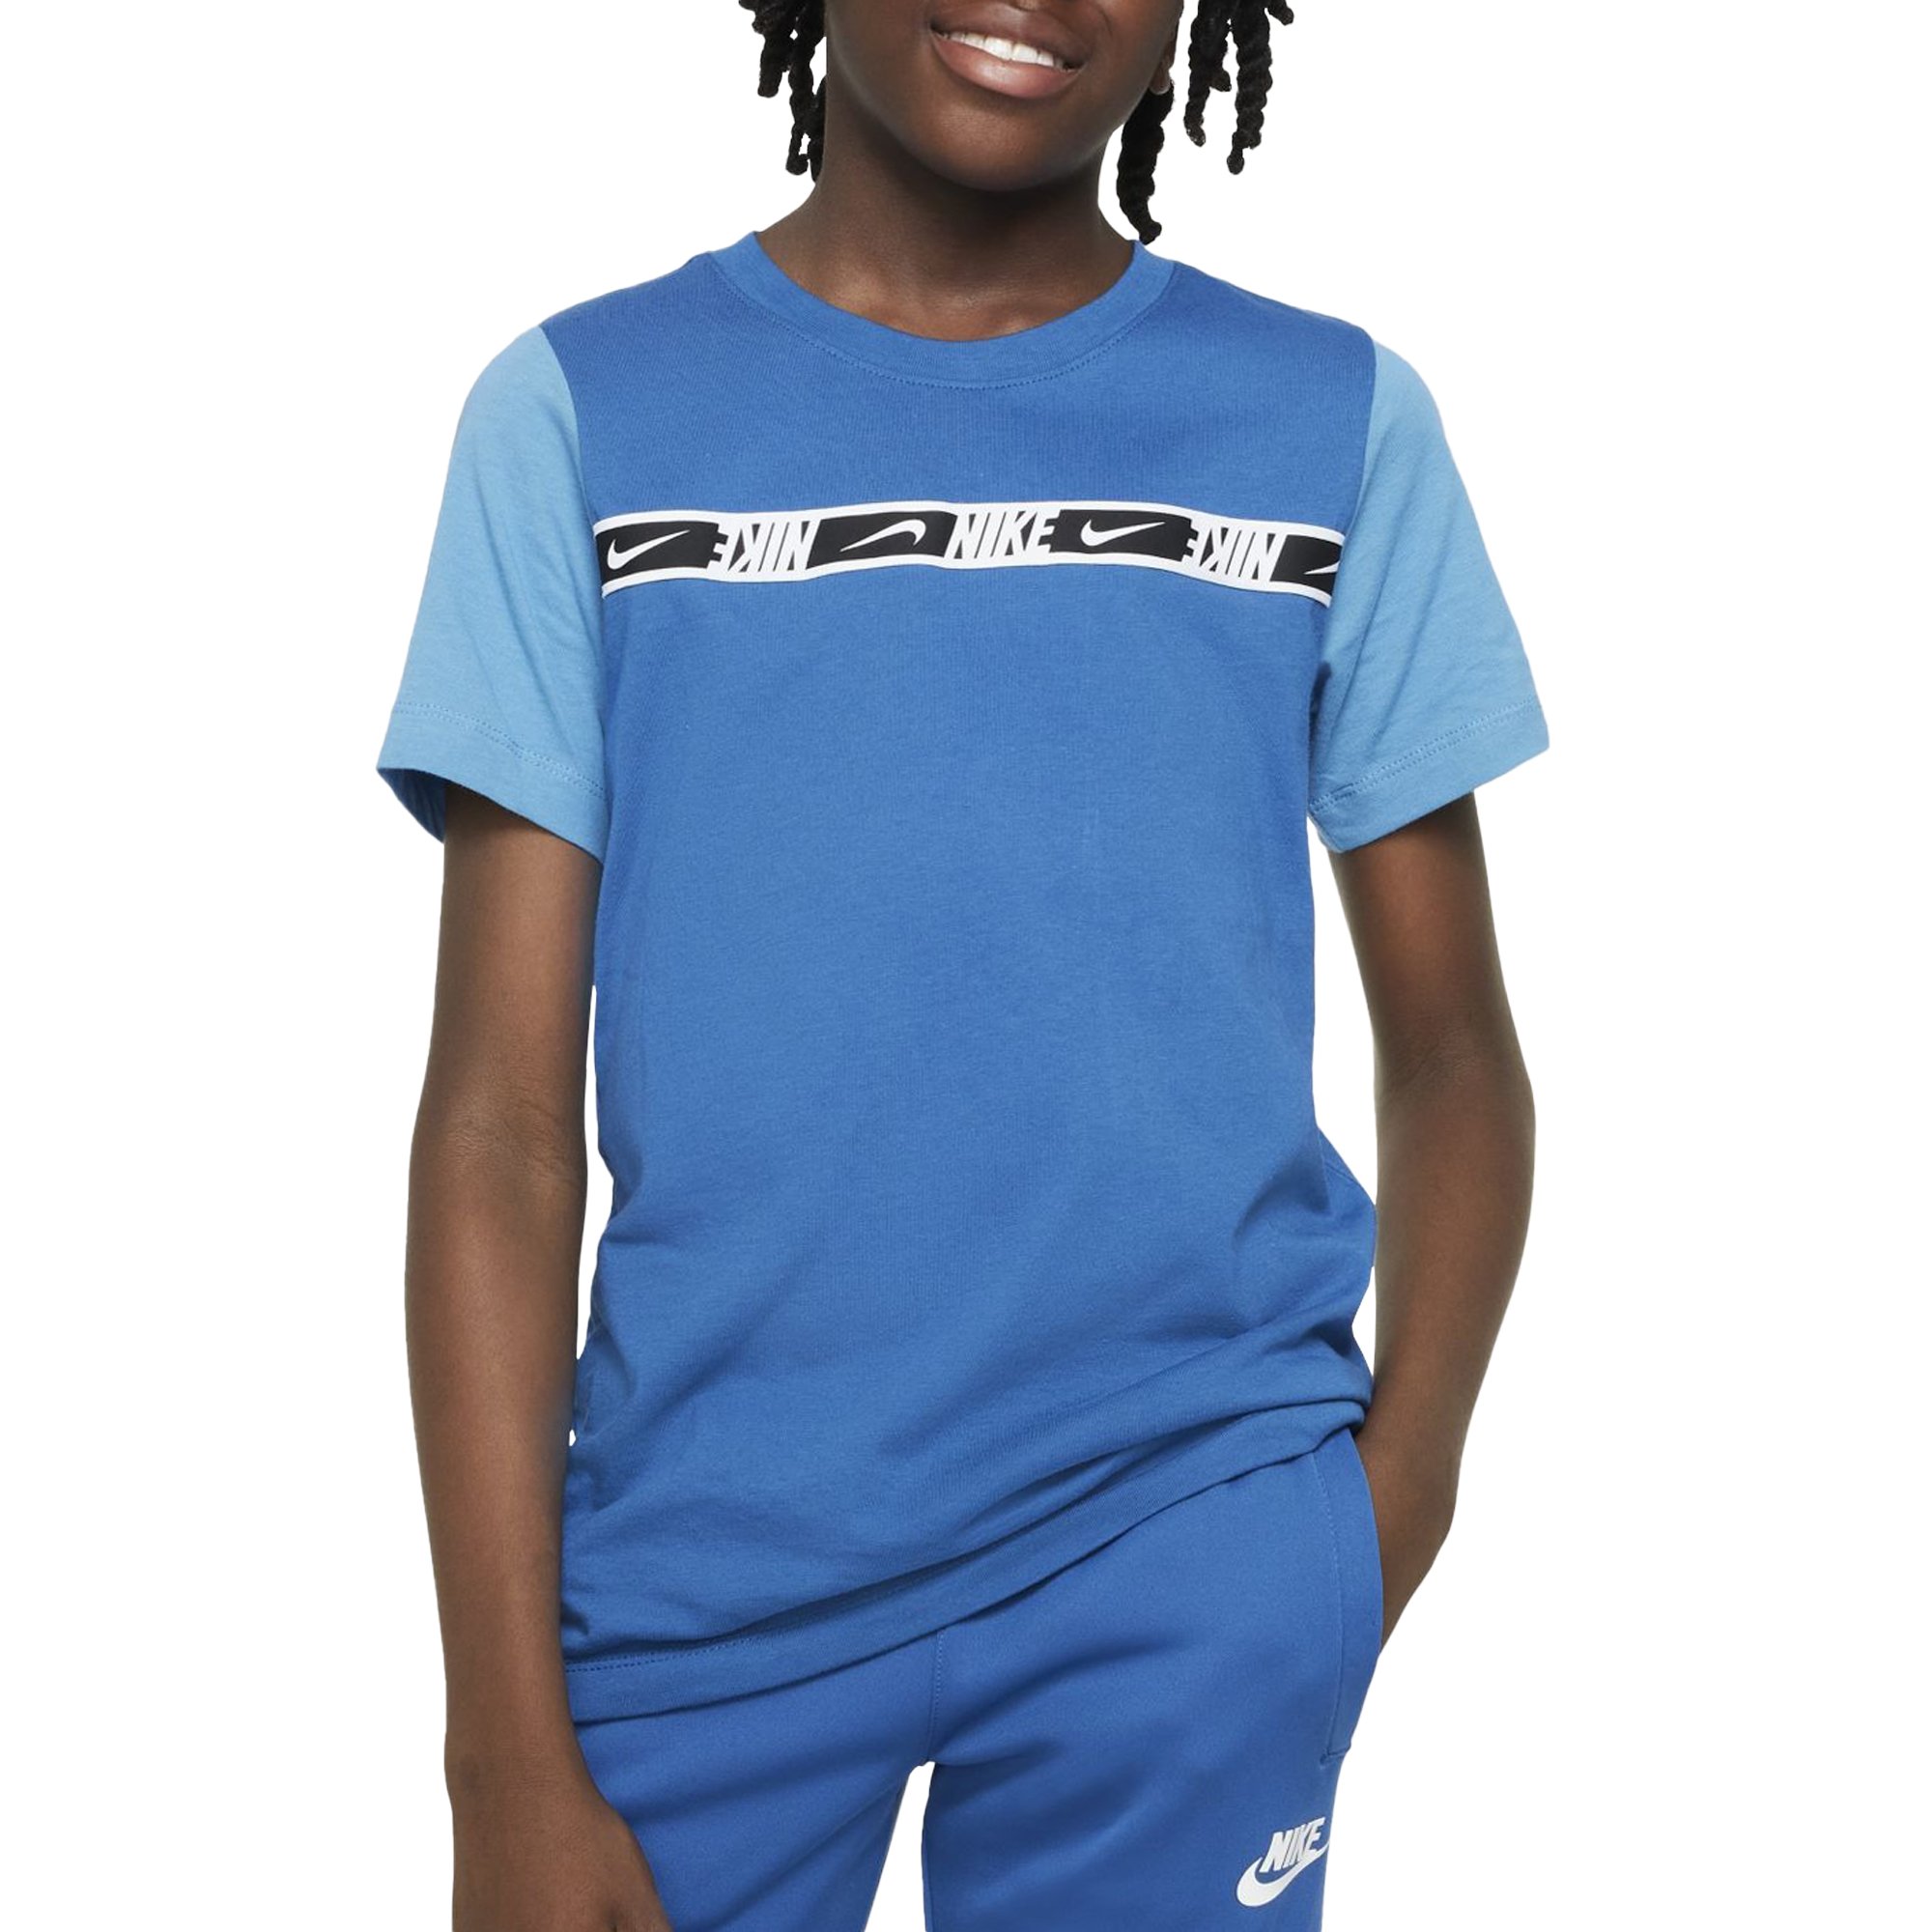 Nike Repeat Shortsleeve Tee basisschool T Shirts online kopen